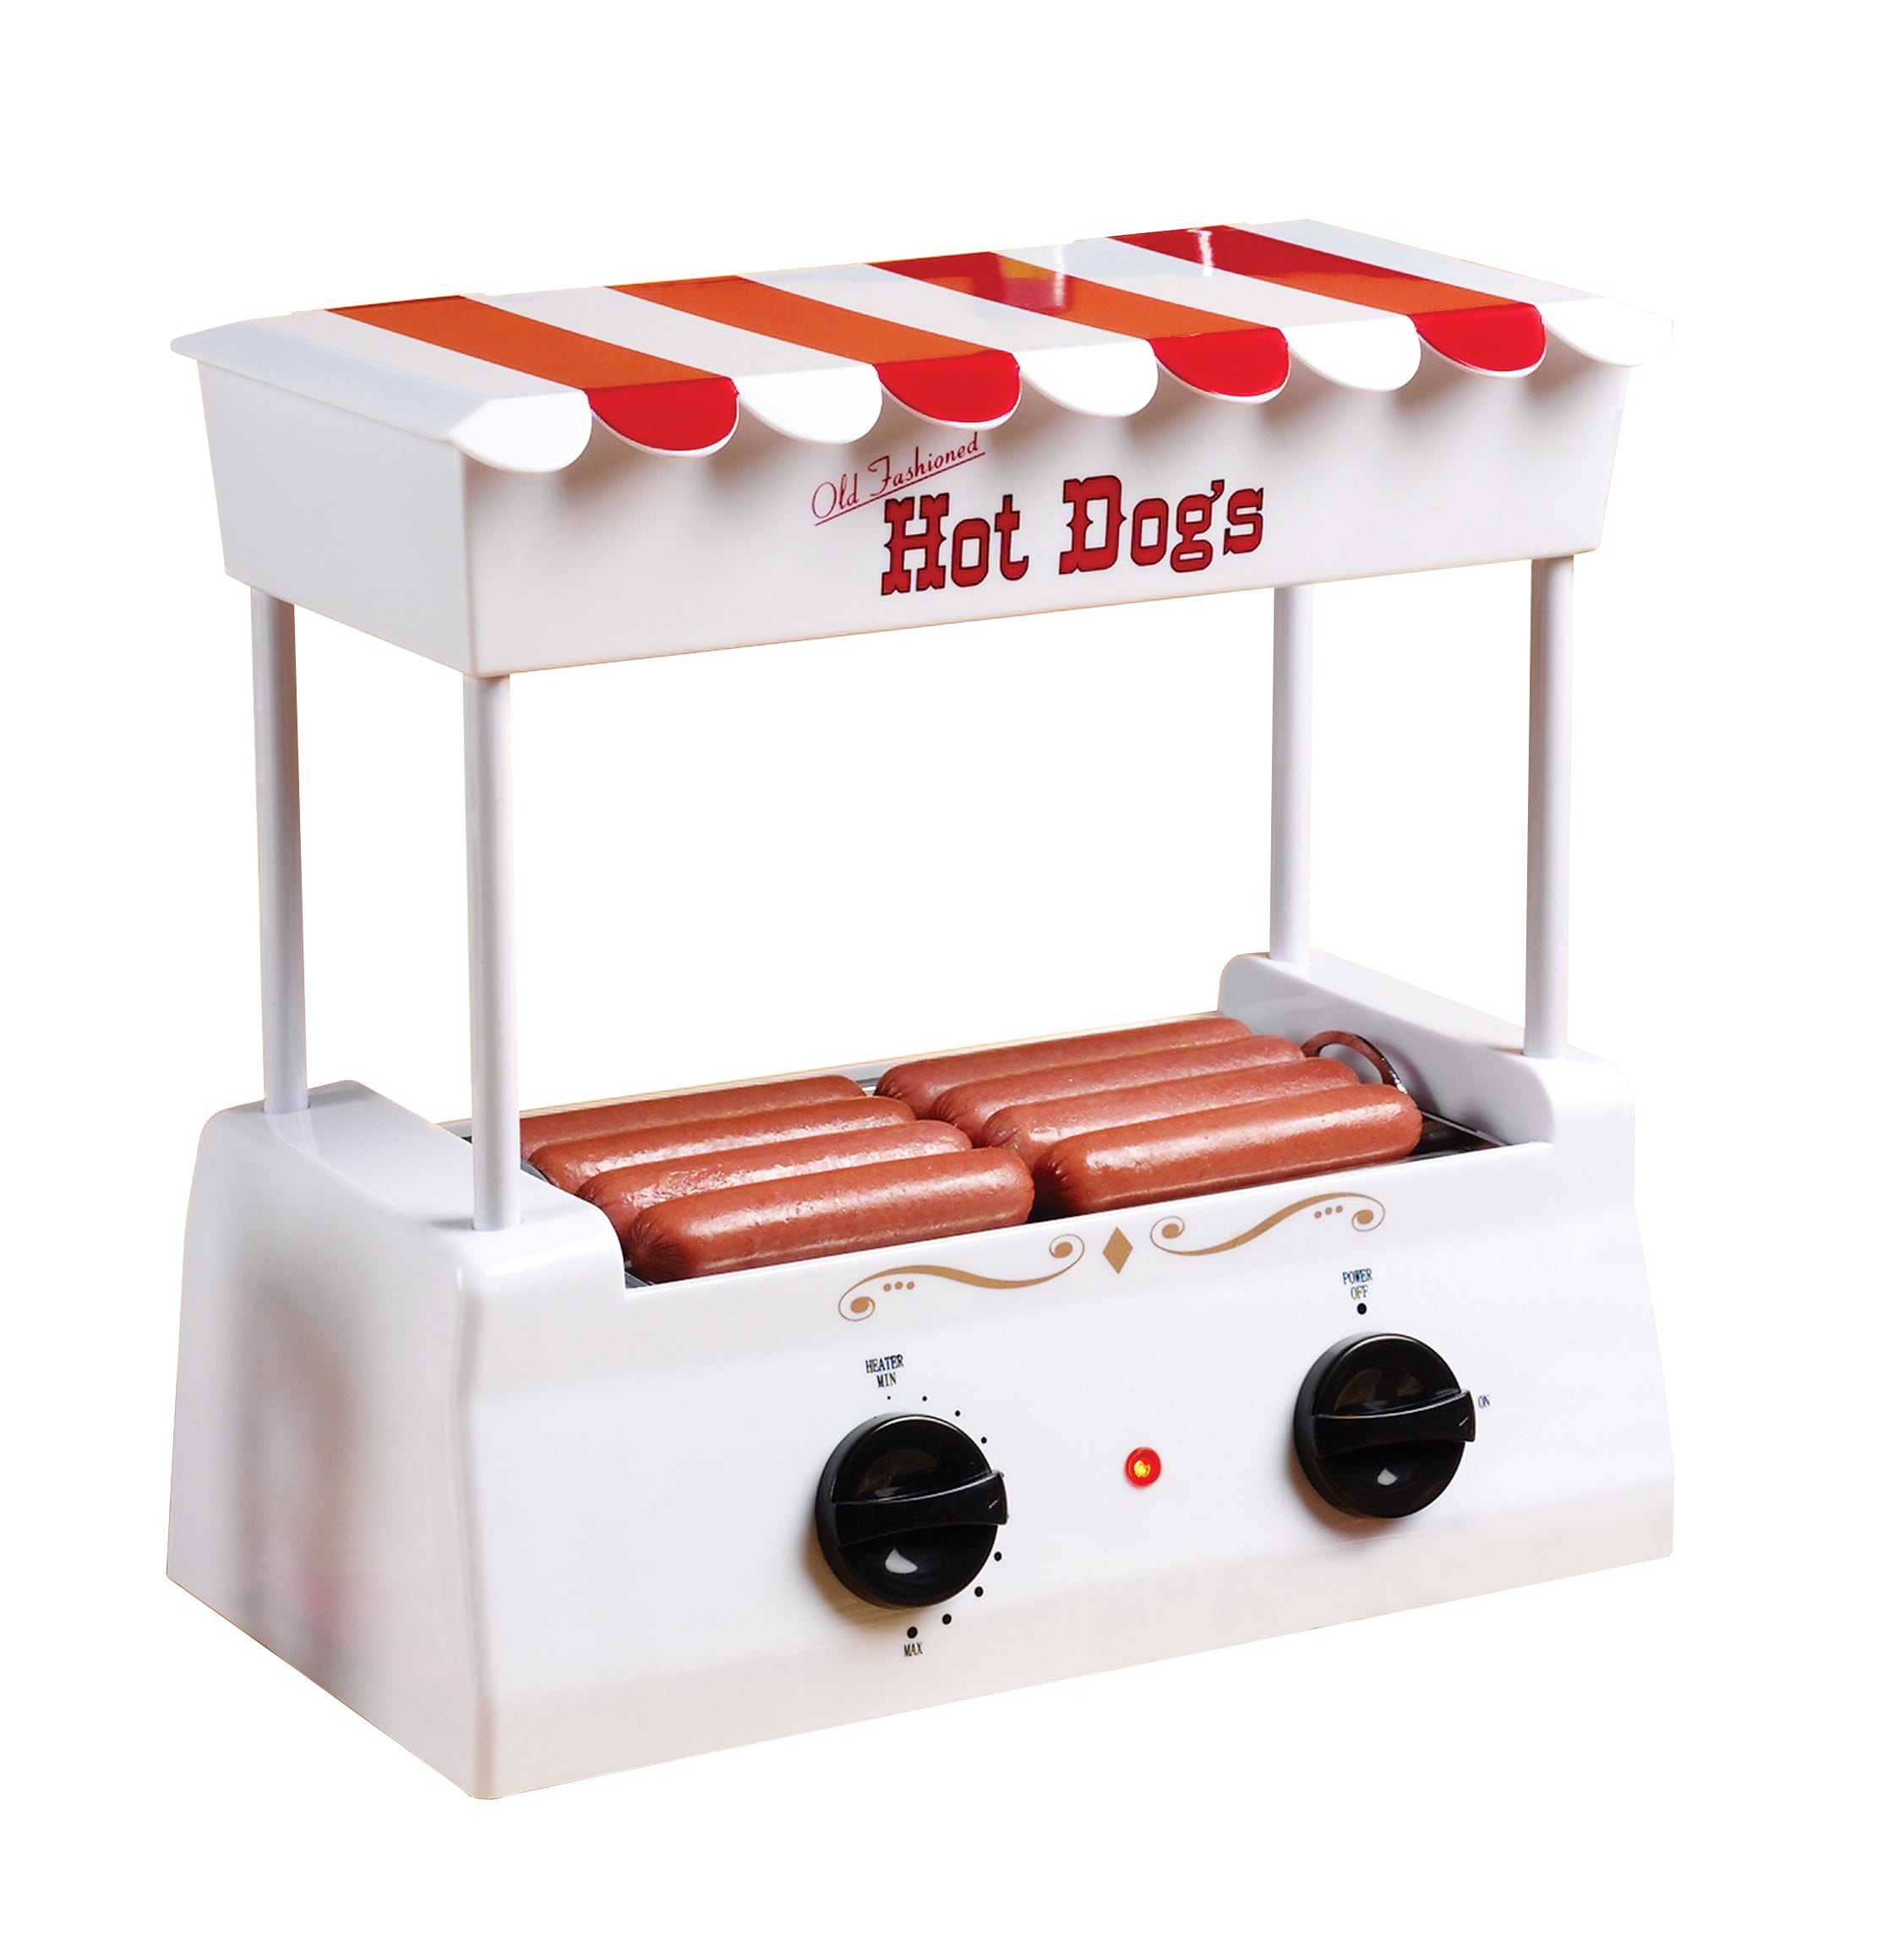 6 Top Hot Dog Toasters 2018 - Reviews of Pop Up Hot Dog and Bun